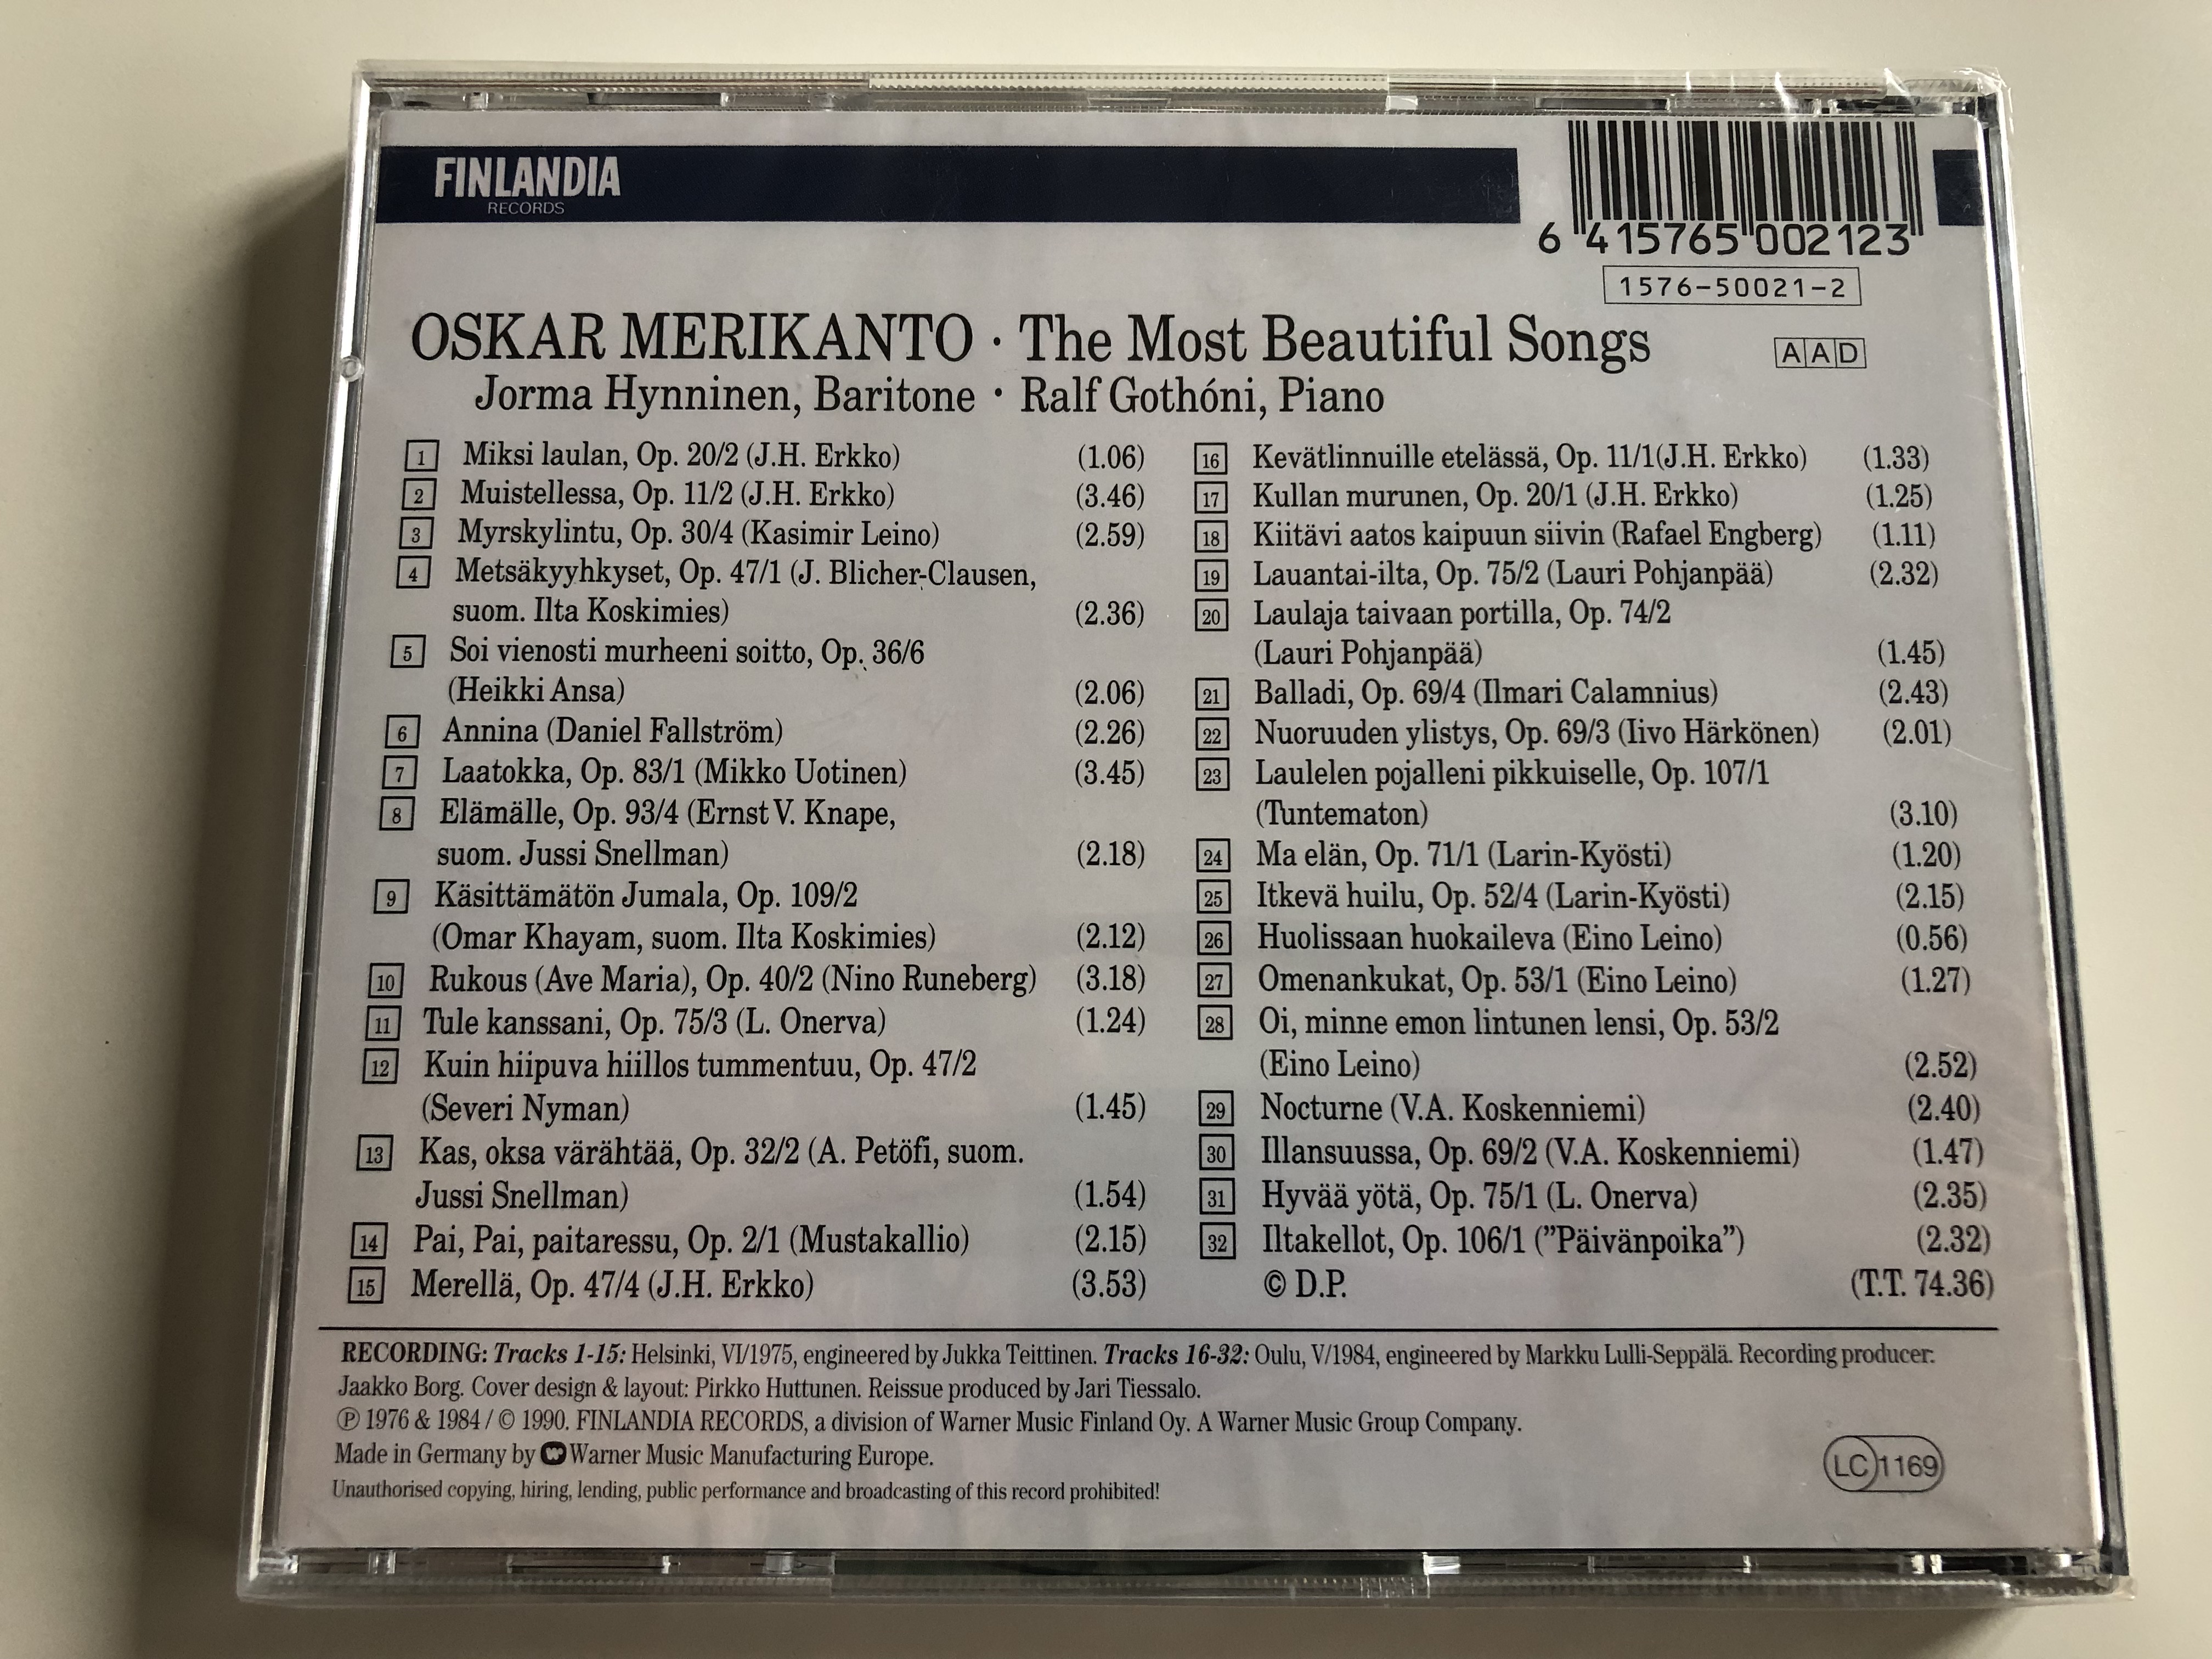 oskar-merikanto-the-most-beautiful-songs-jorma-hynninen-baritone-piano-ralf-gothoni-finlandia-audio-cd-1990-1576-50021-2-3-.jpg